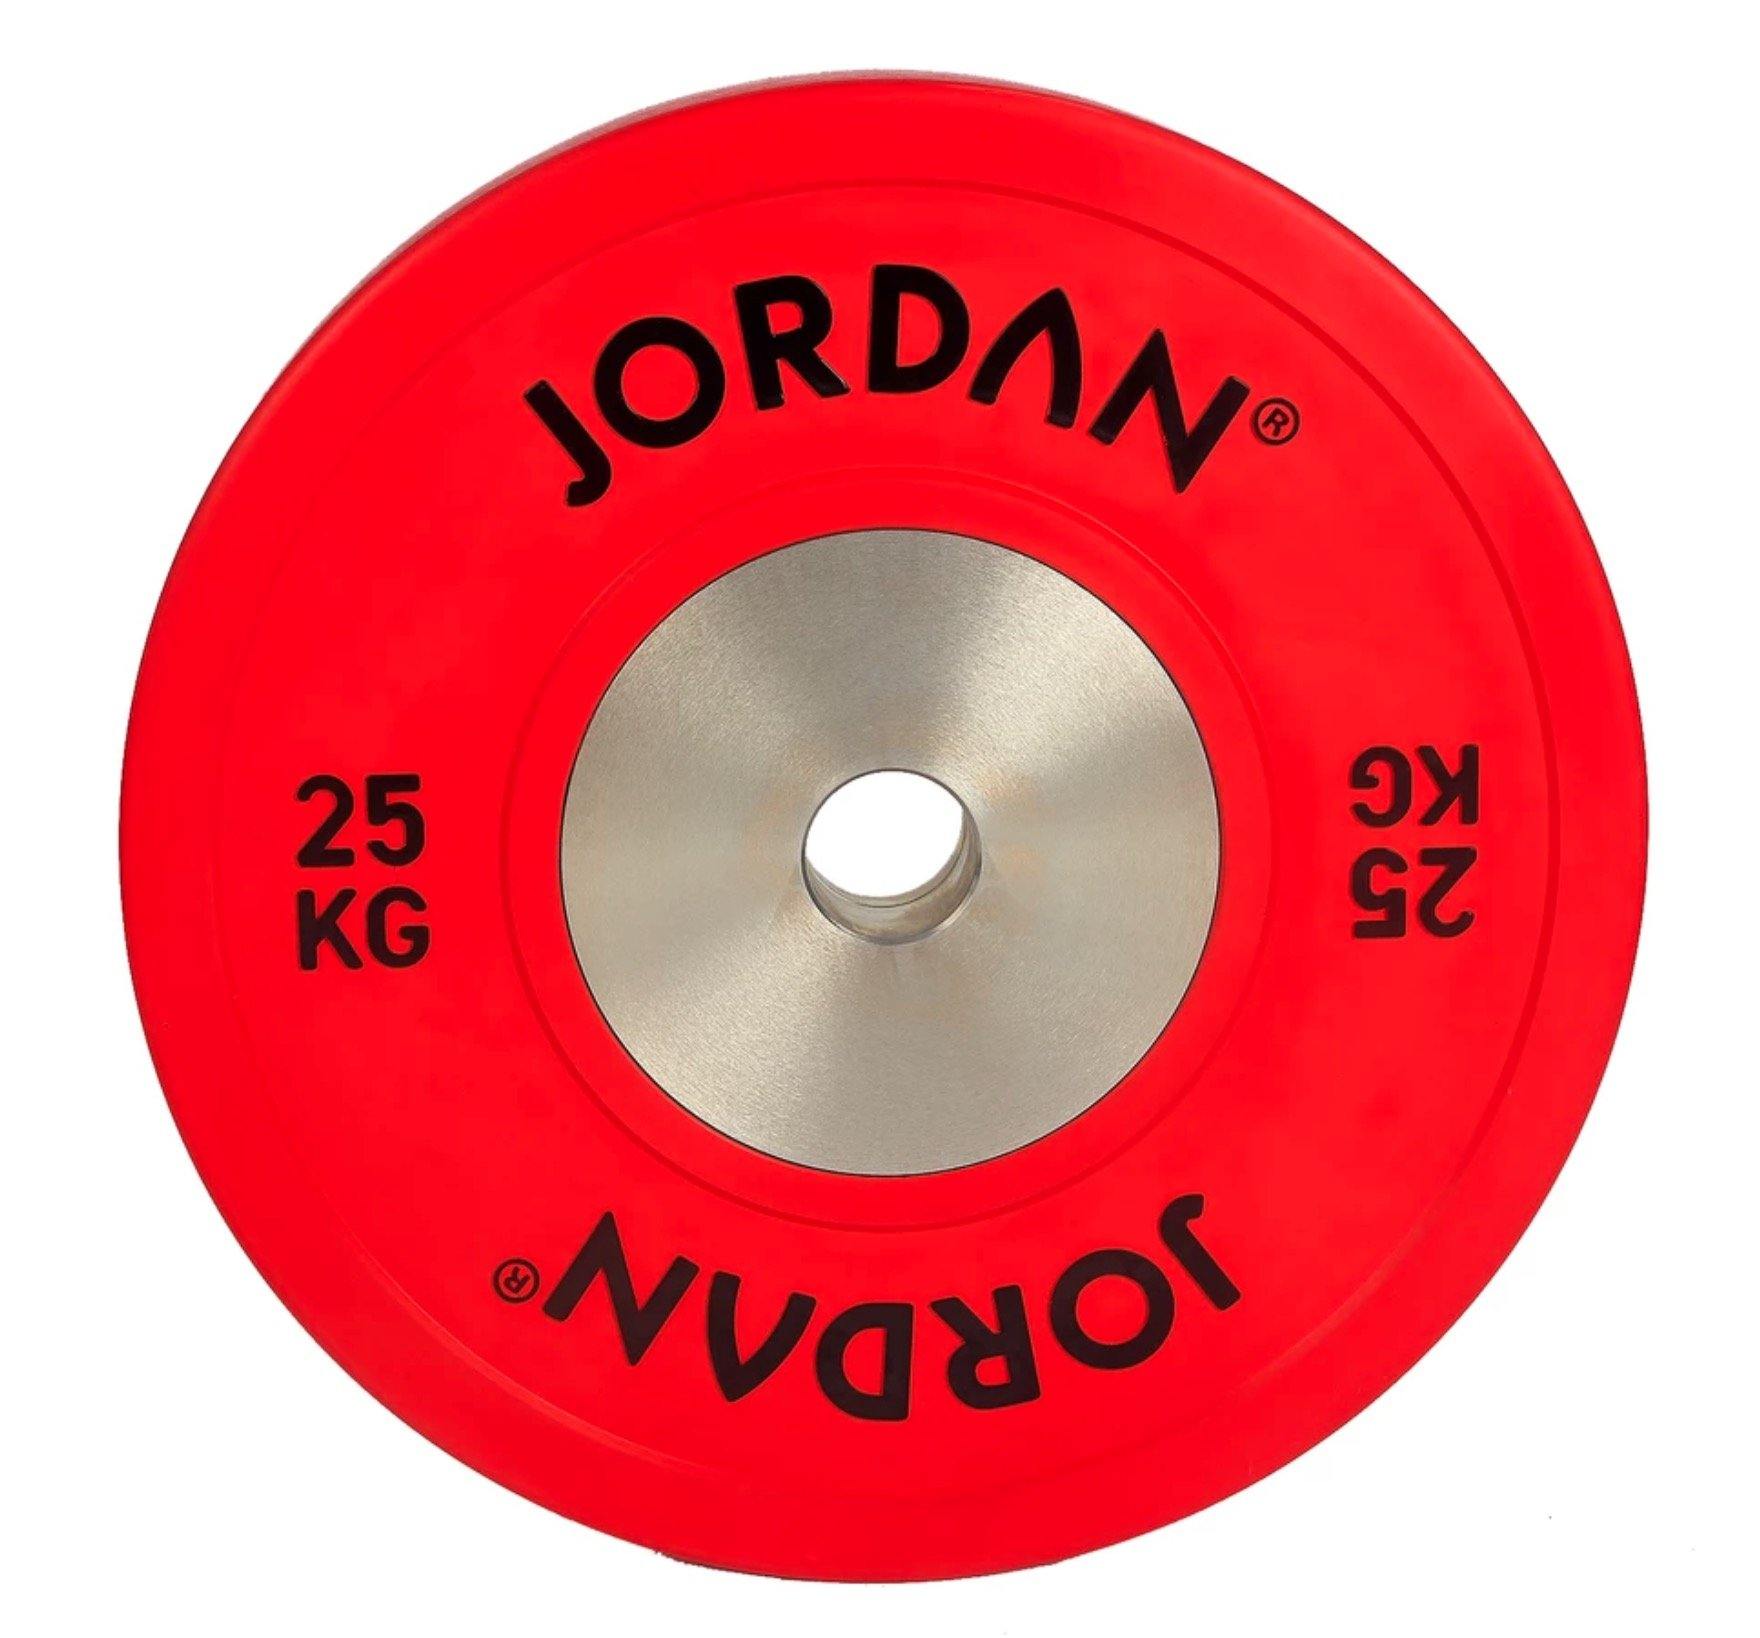 Jordan Calibrated Colour Rubber Competition Plate